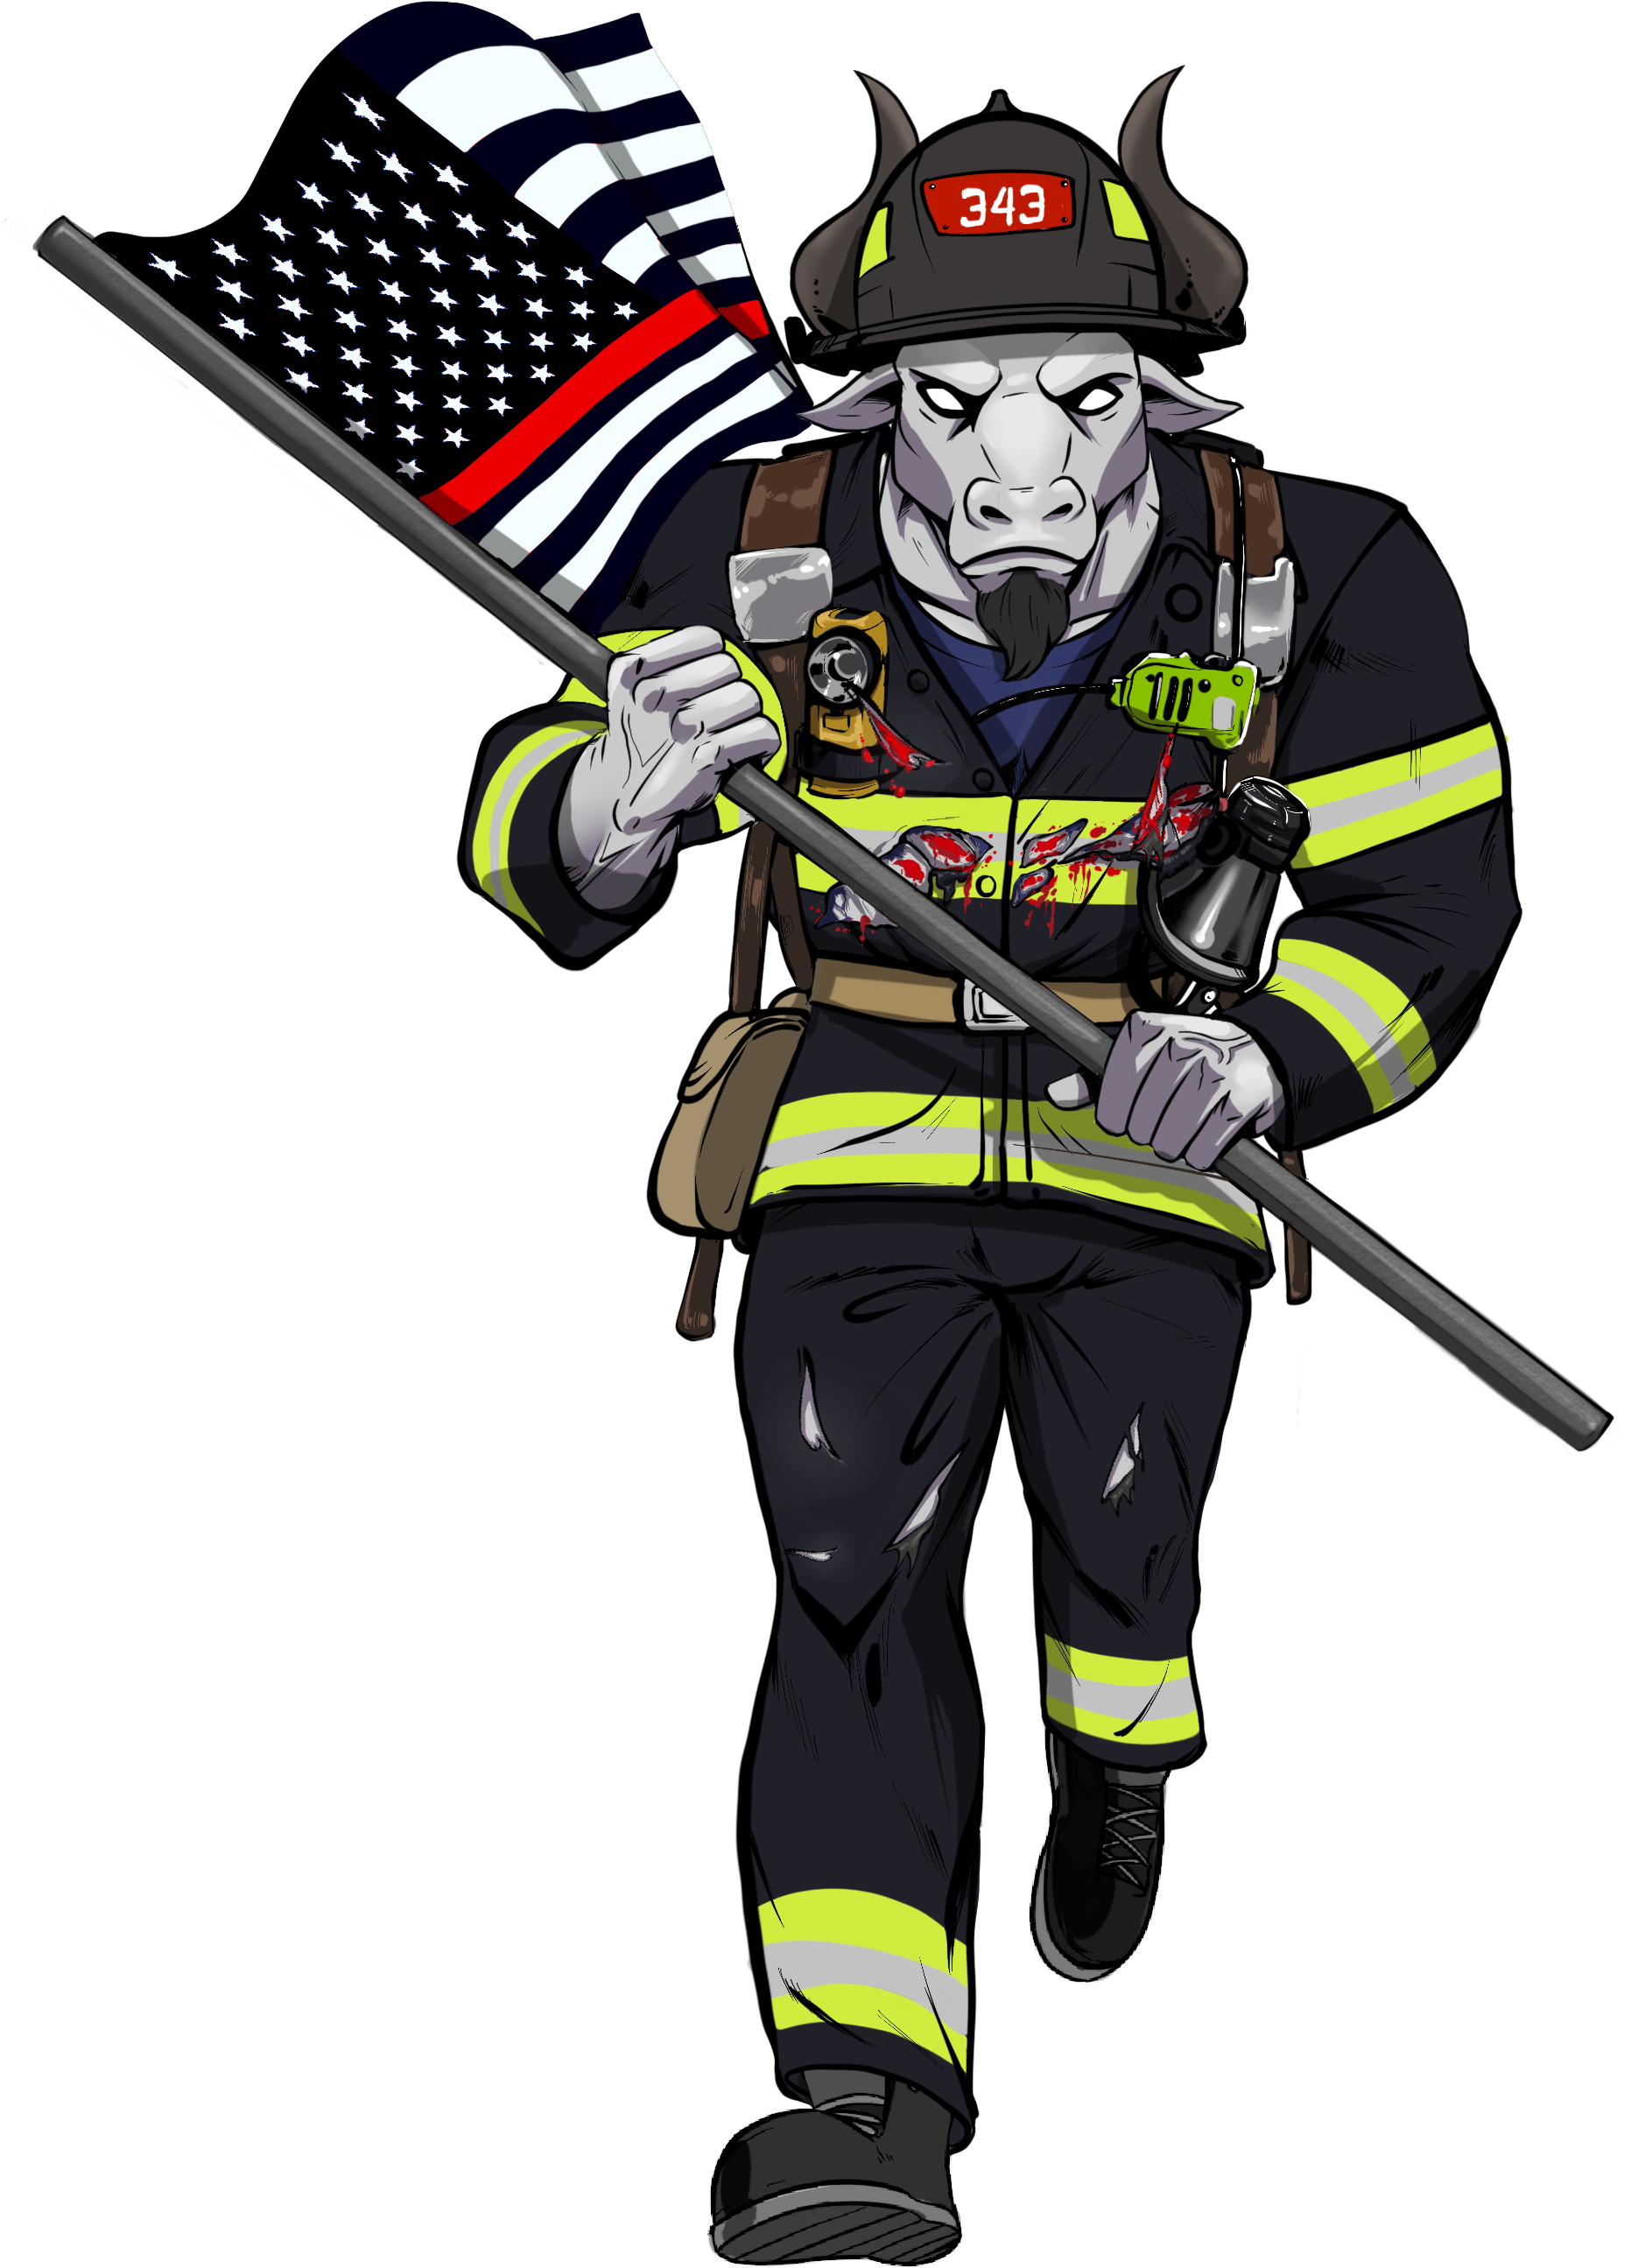 Firefighter Tee